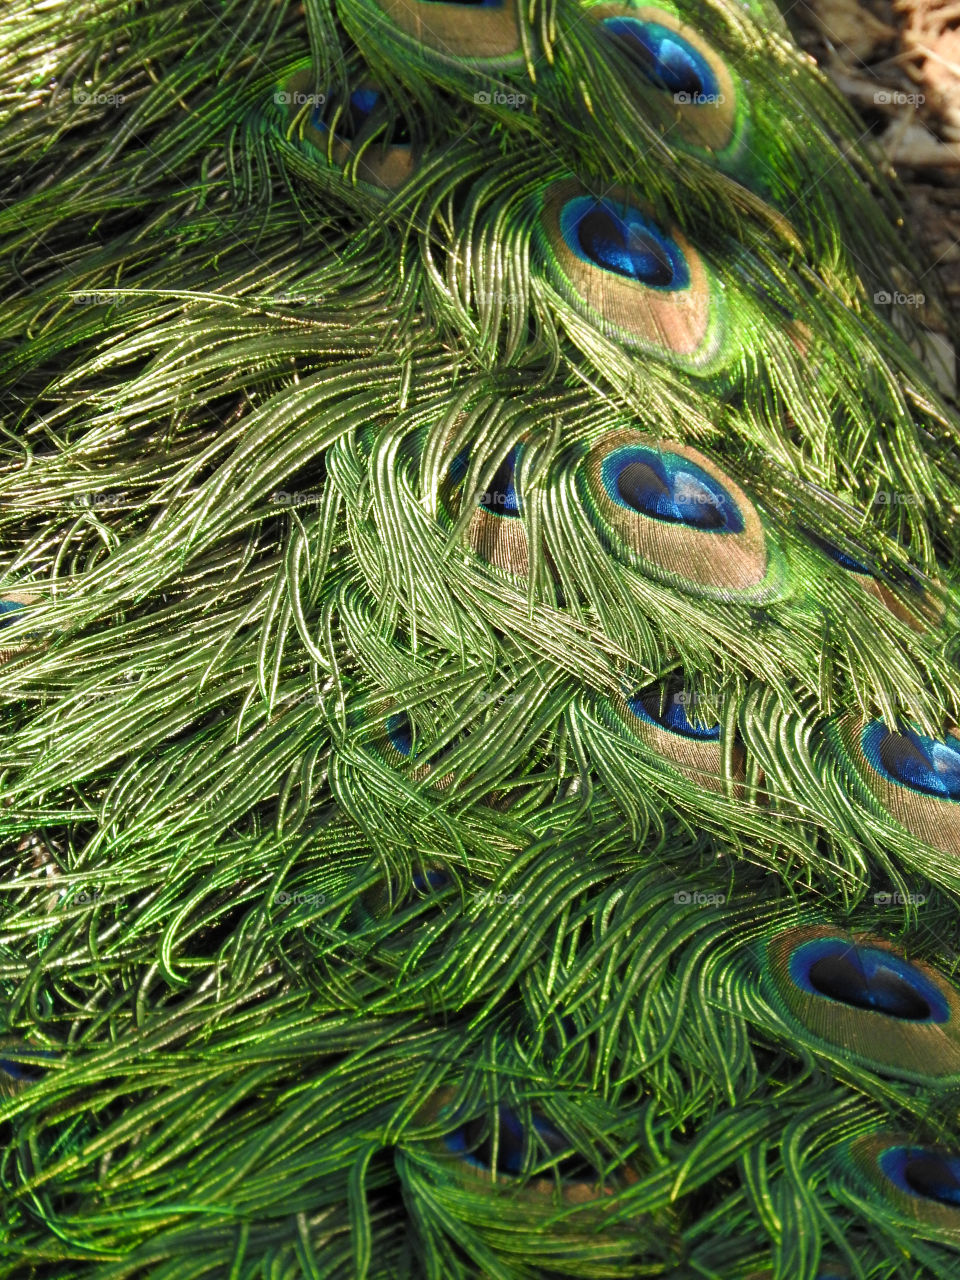 Peacock Close-up